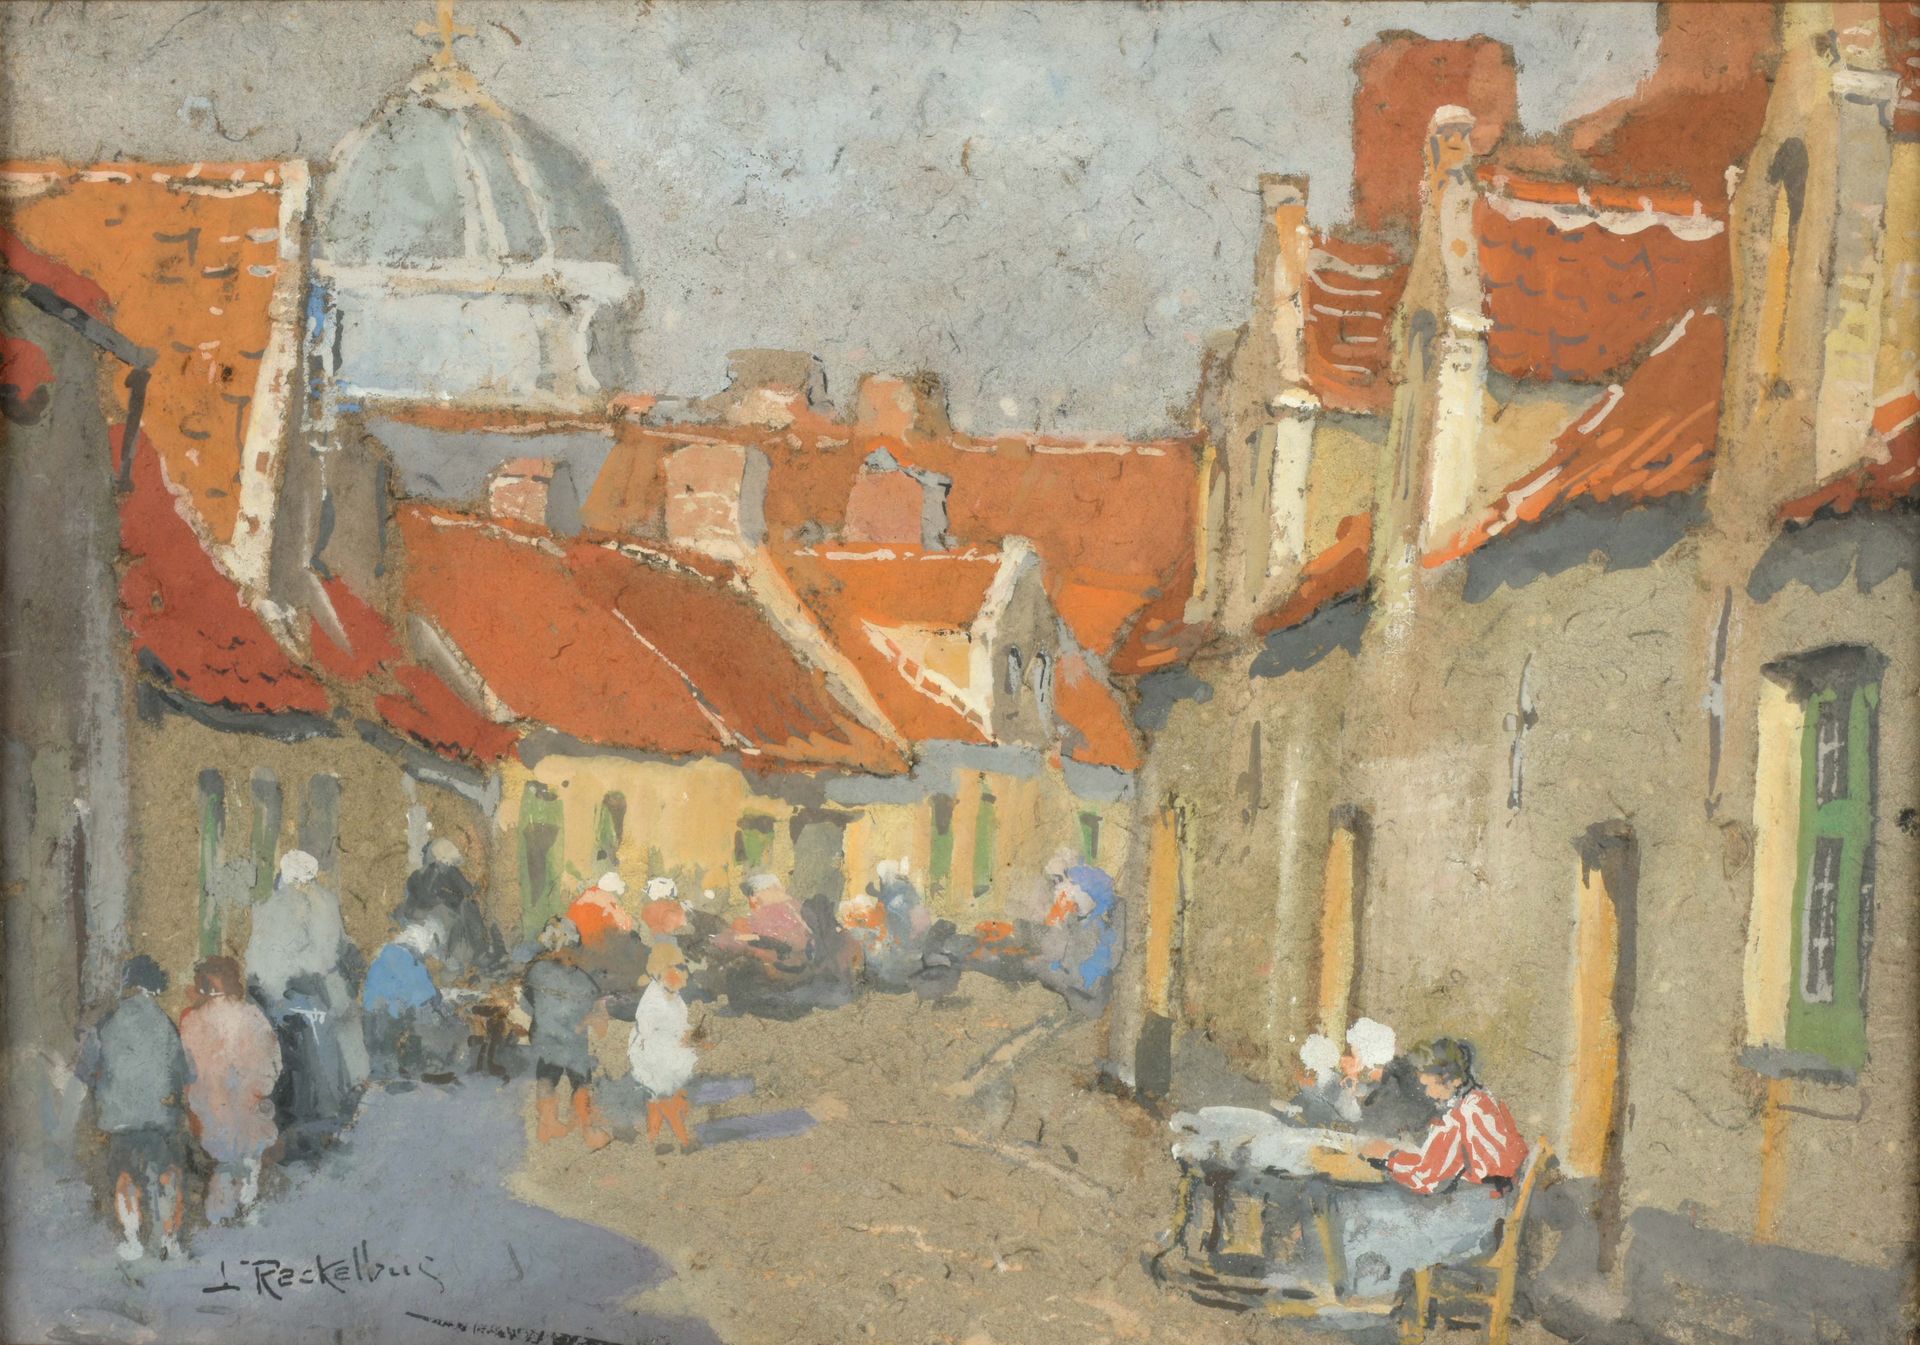 RECKELBUS, Louis (1864-1958) Rolweg in Bruges

Gouache (26 x 37 cm), getekend li&hellip;